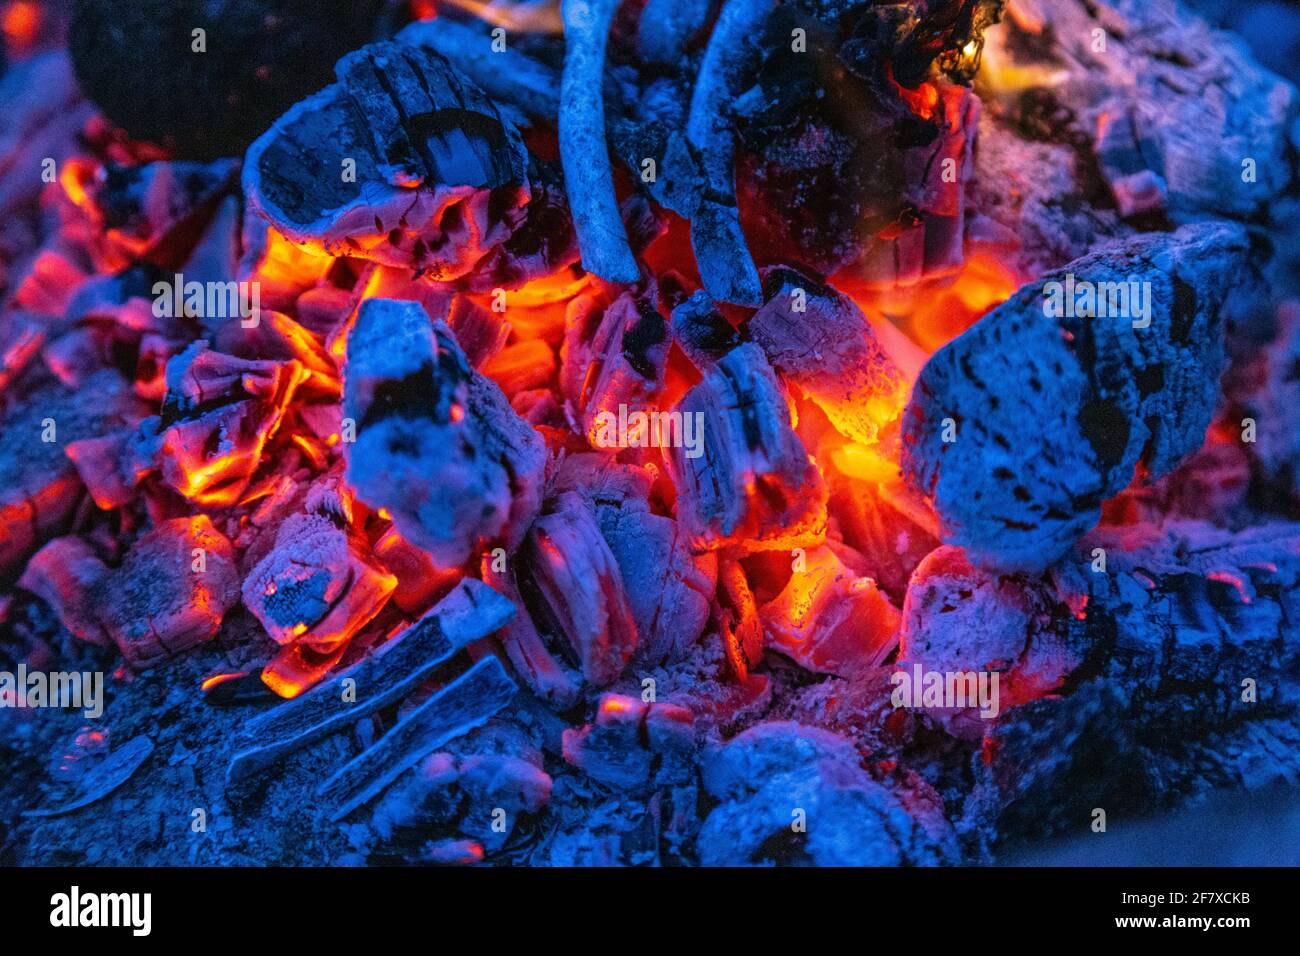 Fire burning coals, glowing embers Stock Photo